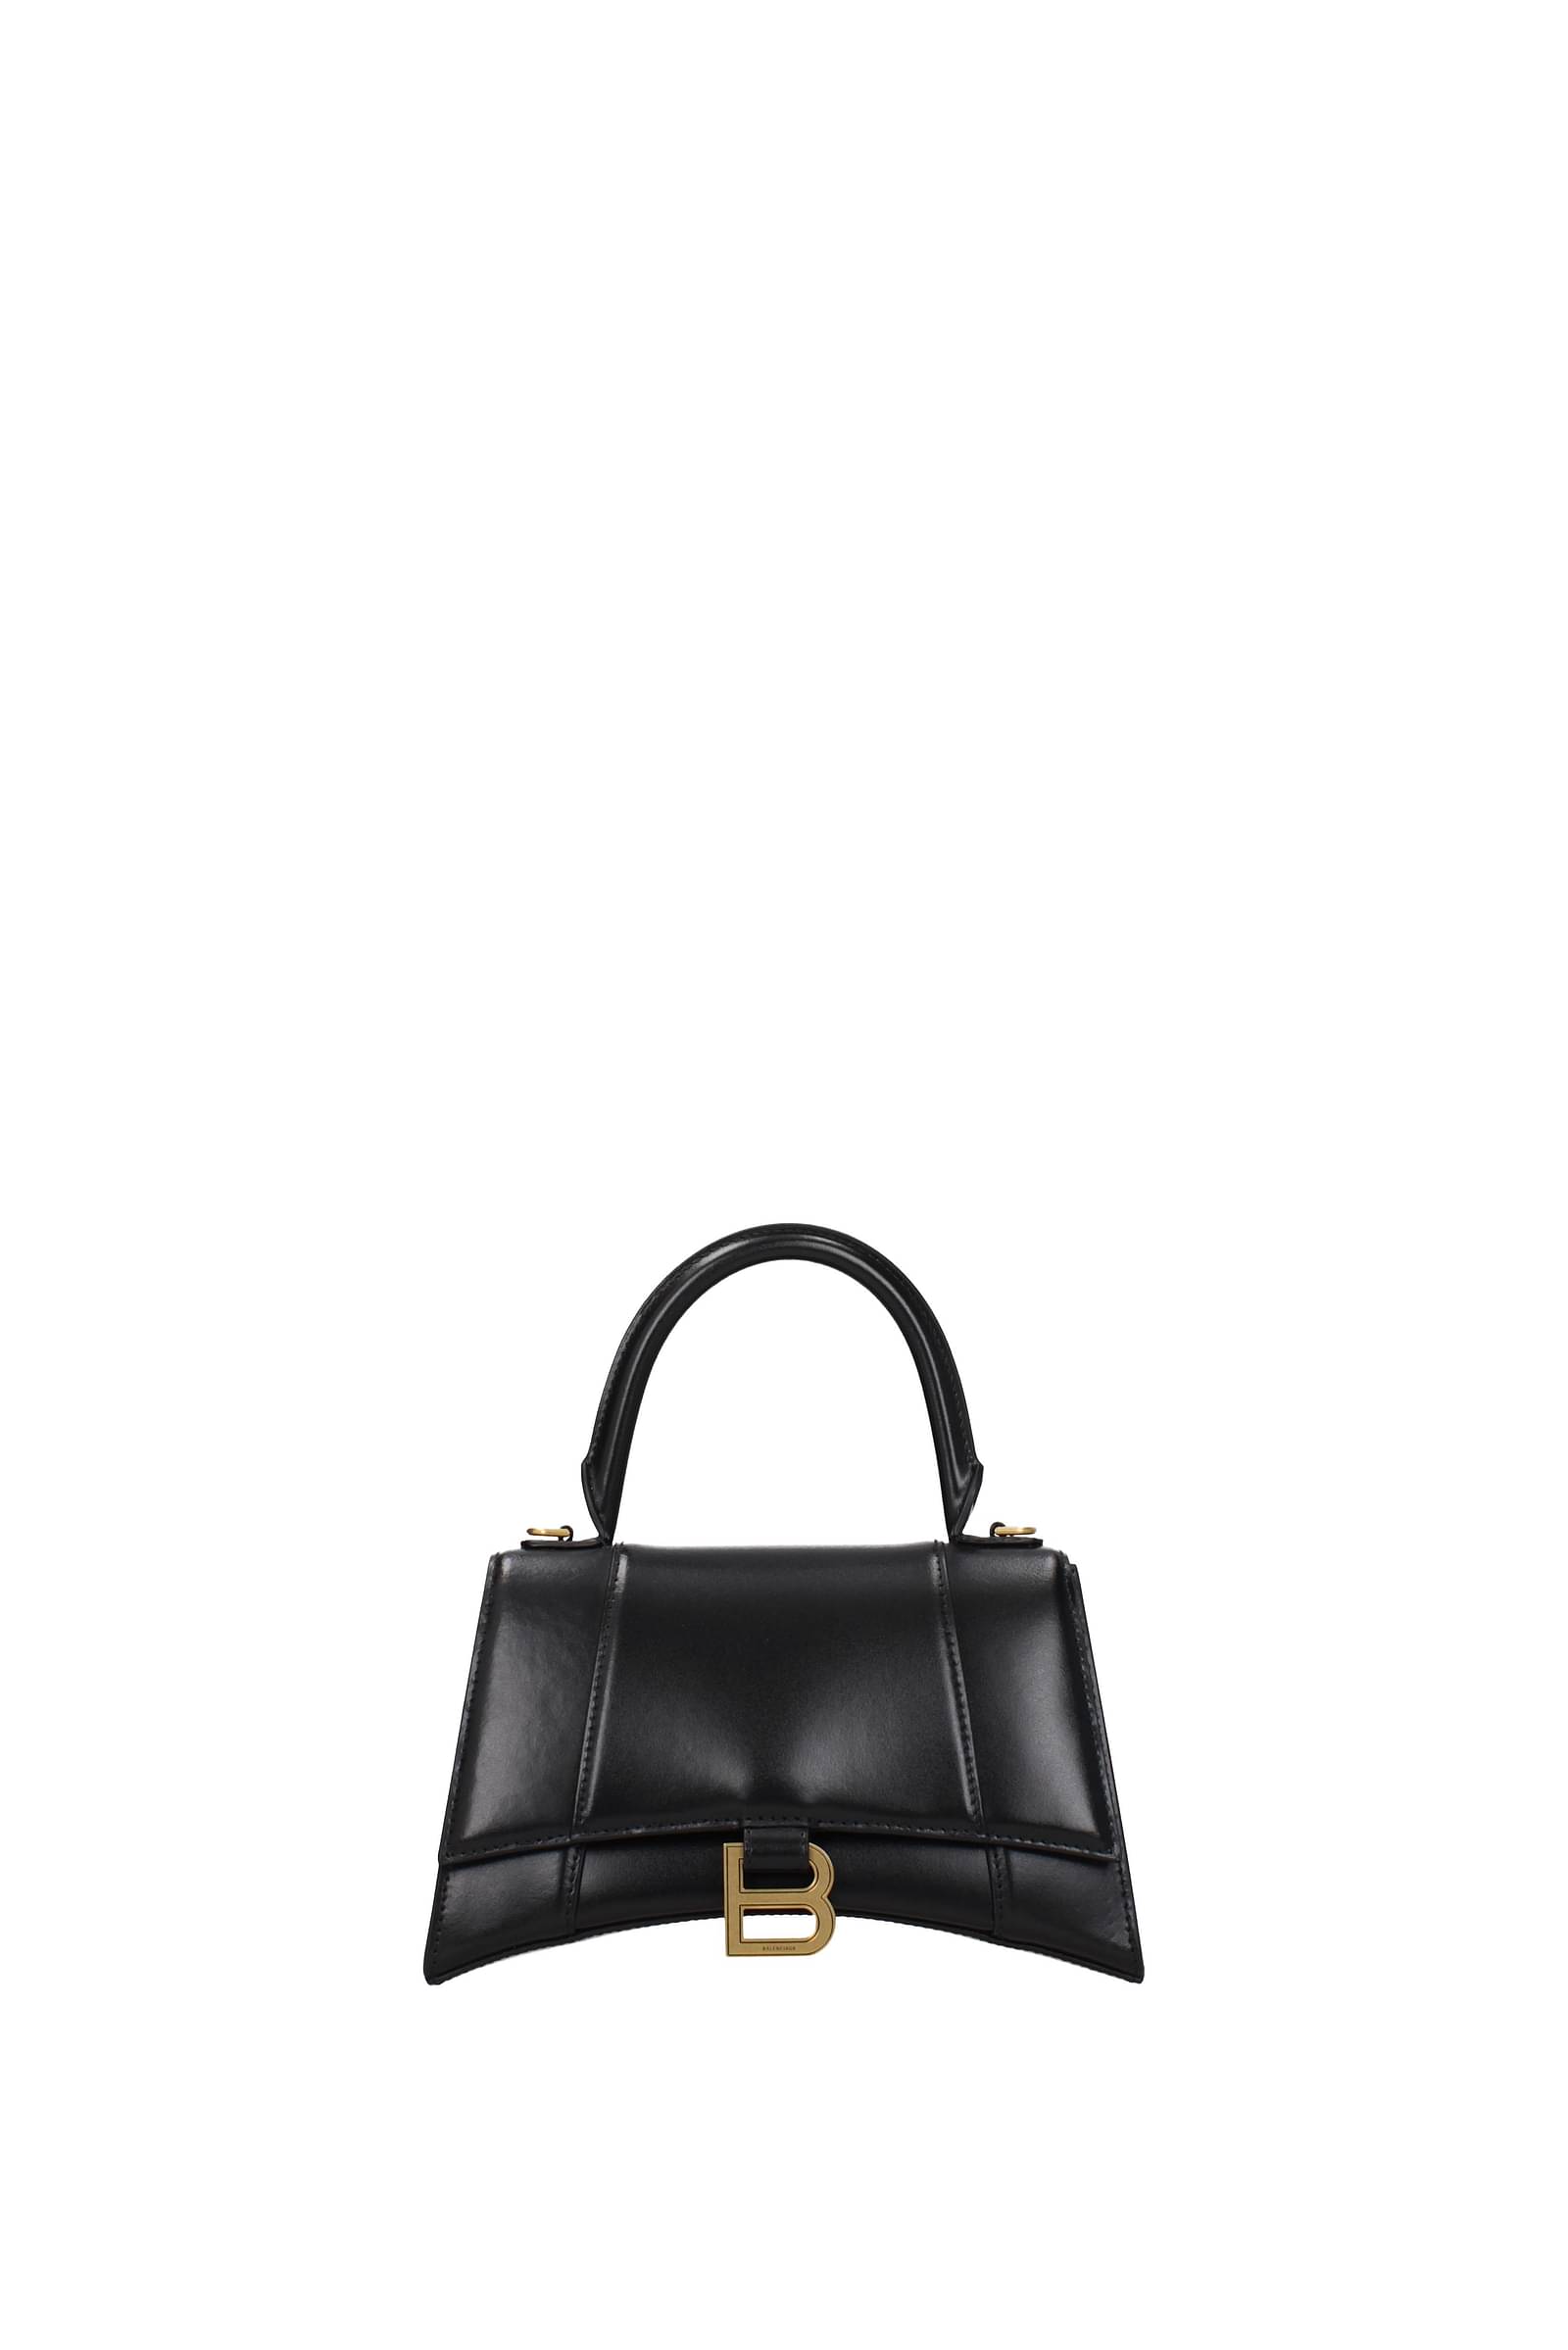 Balenciaga B Dot Quilted Leather Shoulder Bag In Black  ModeSens